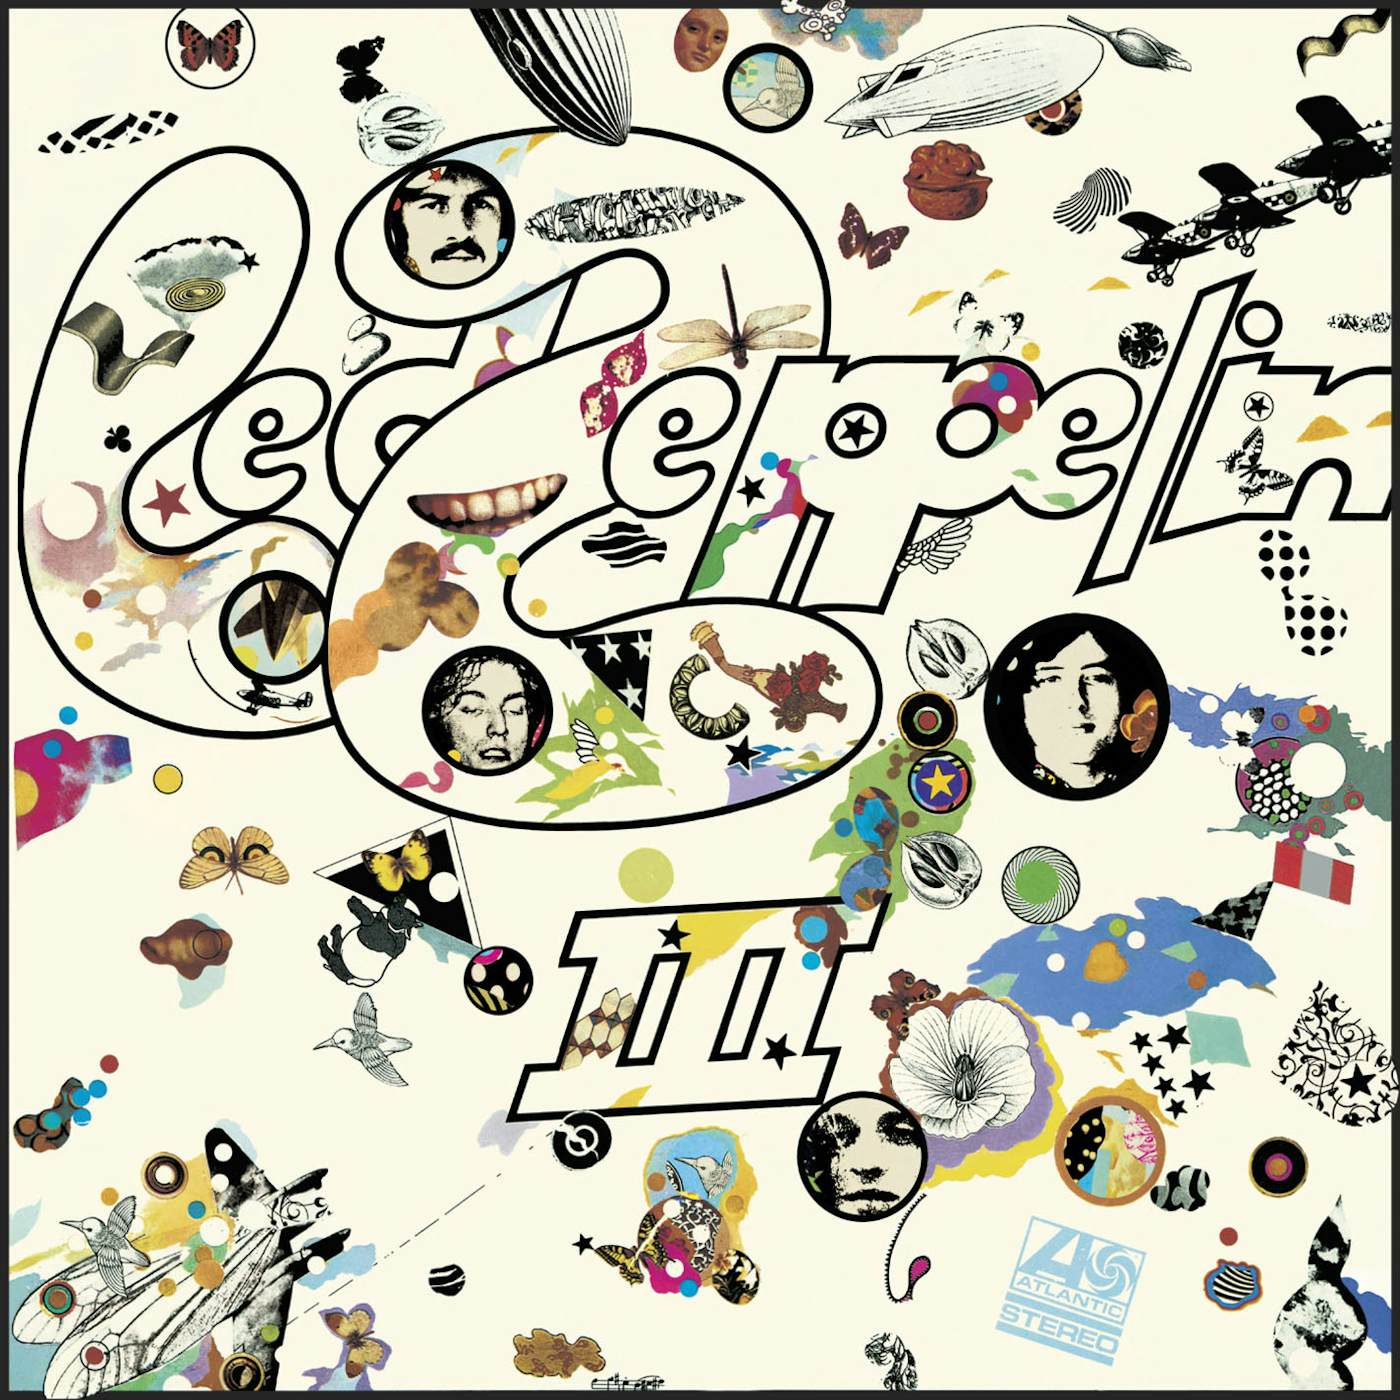  Led Zeppelin III (180G/Remastered) Vinyl Record